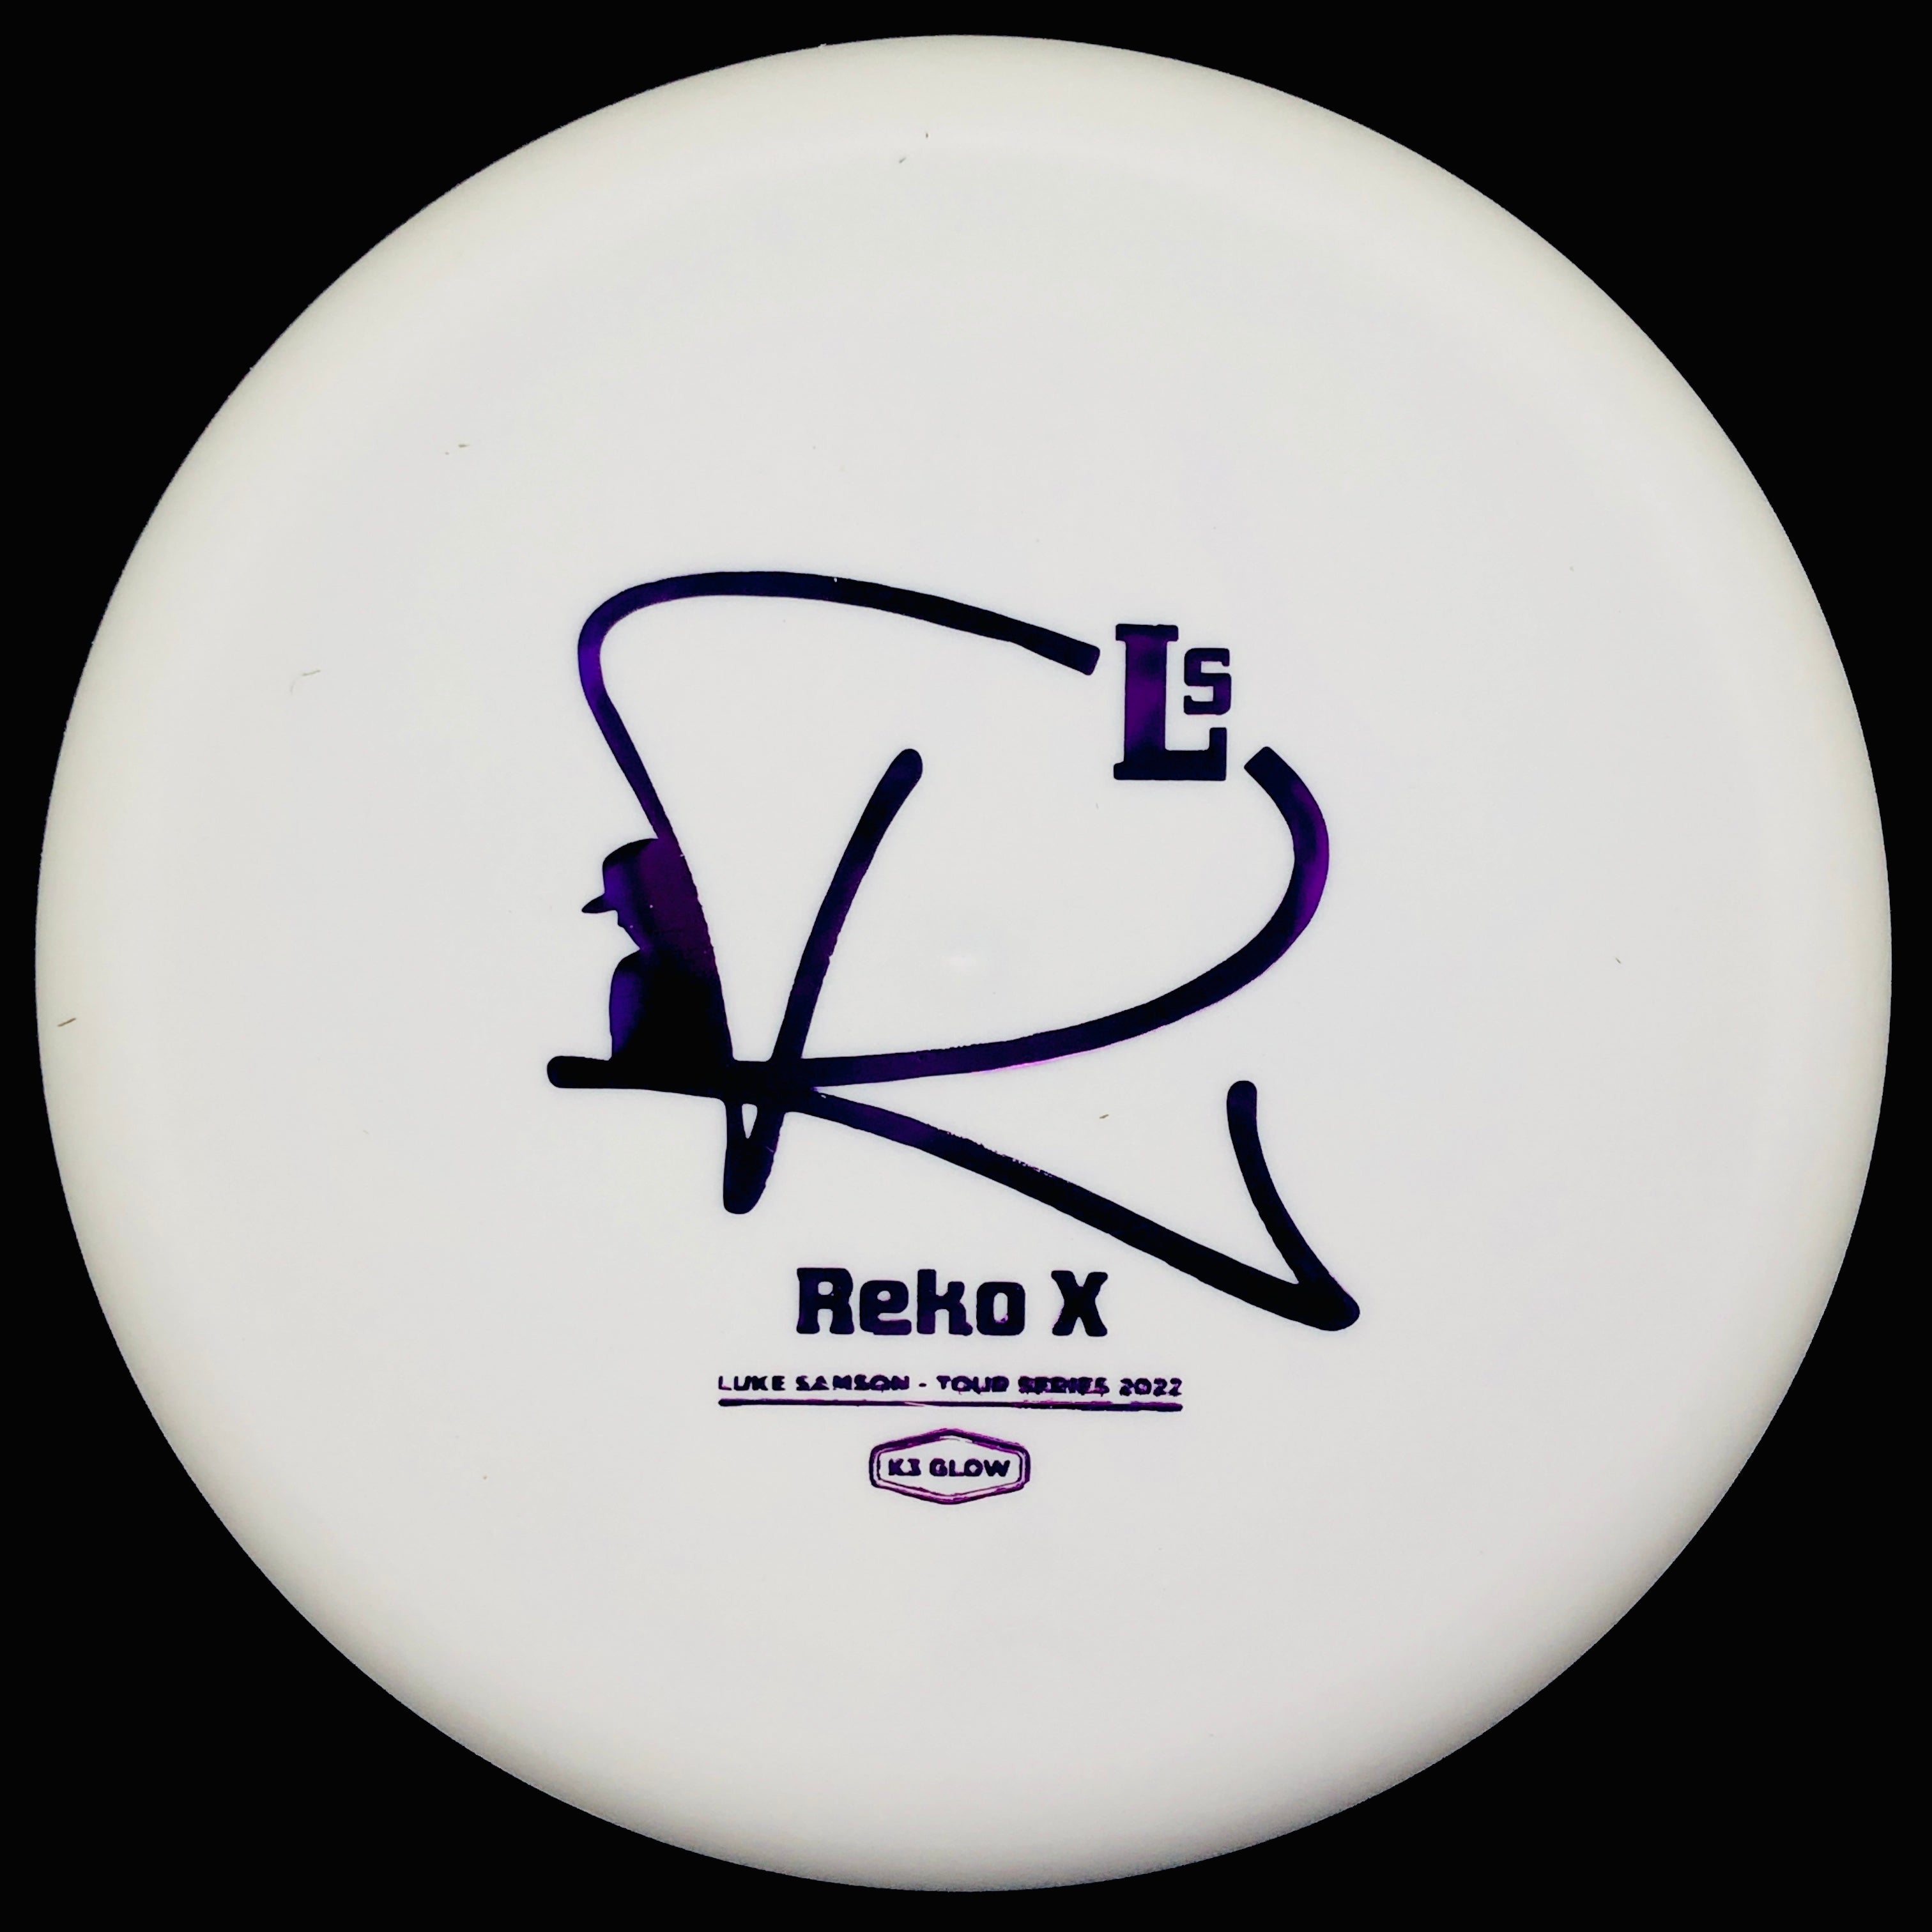 Kastaplast K3 Glow RekoX (Luke Samson 2022 Tour Series)